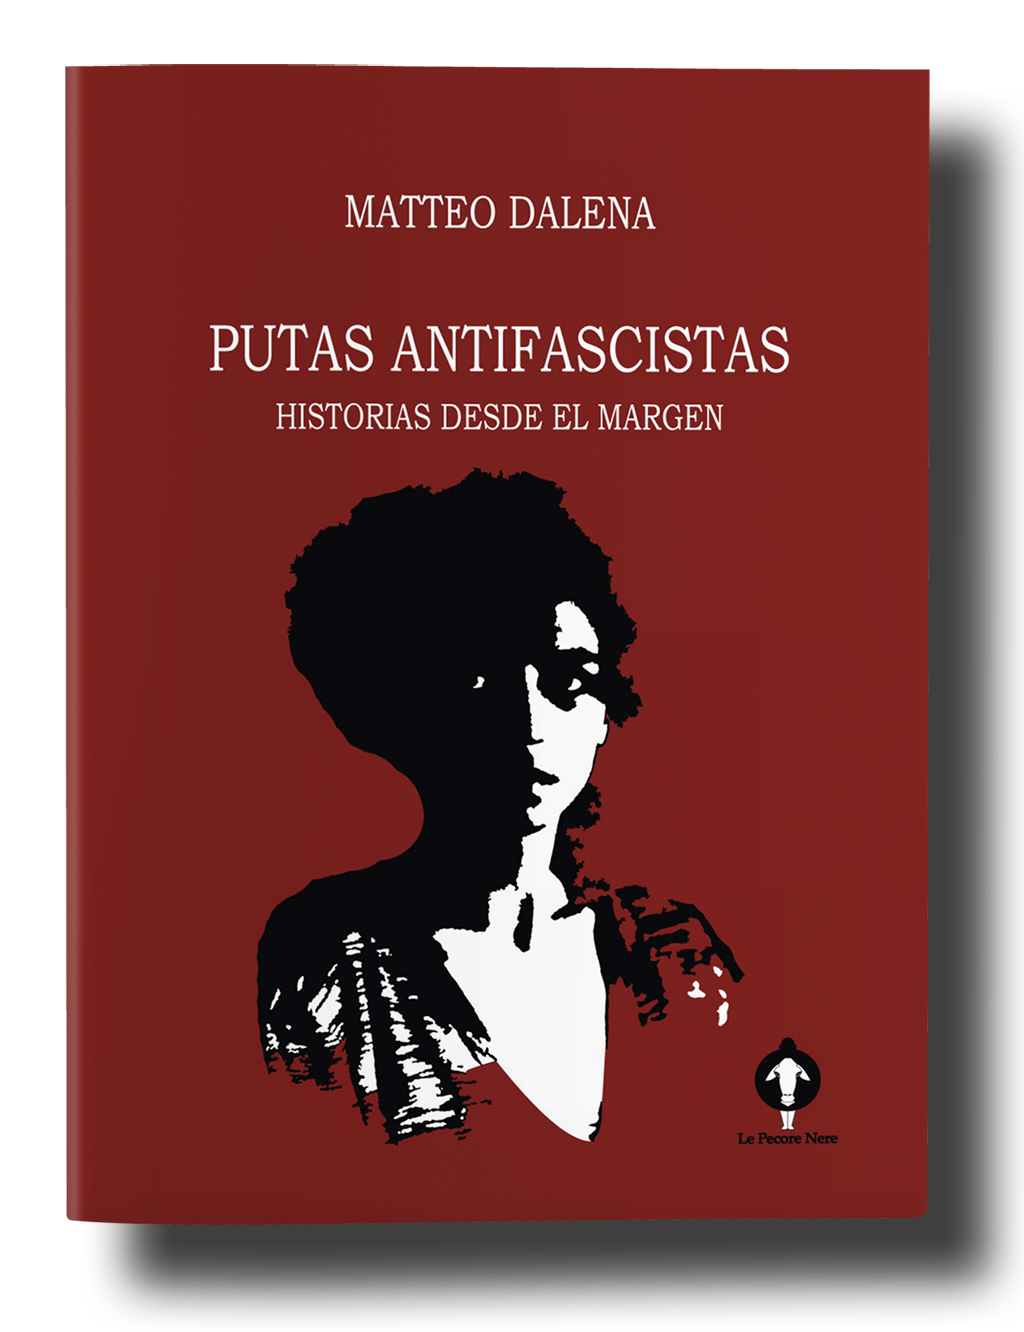 PECORE NERE EDITORIAL, Putas antifascistas, Matteo Dalena